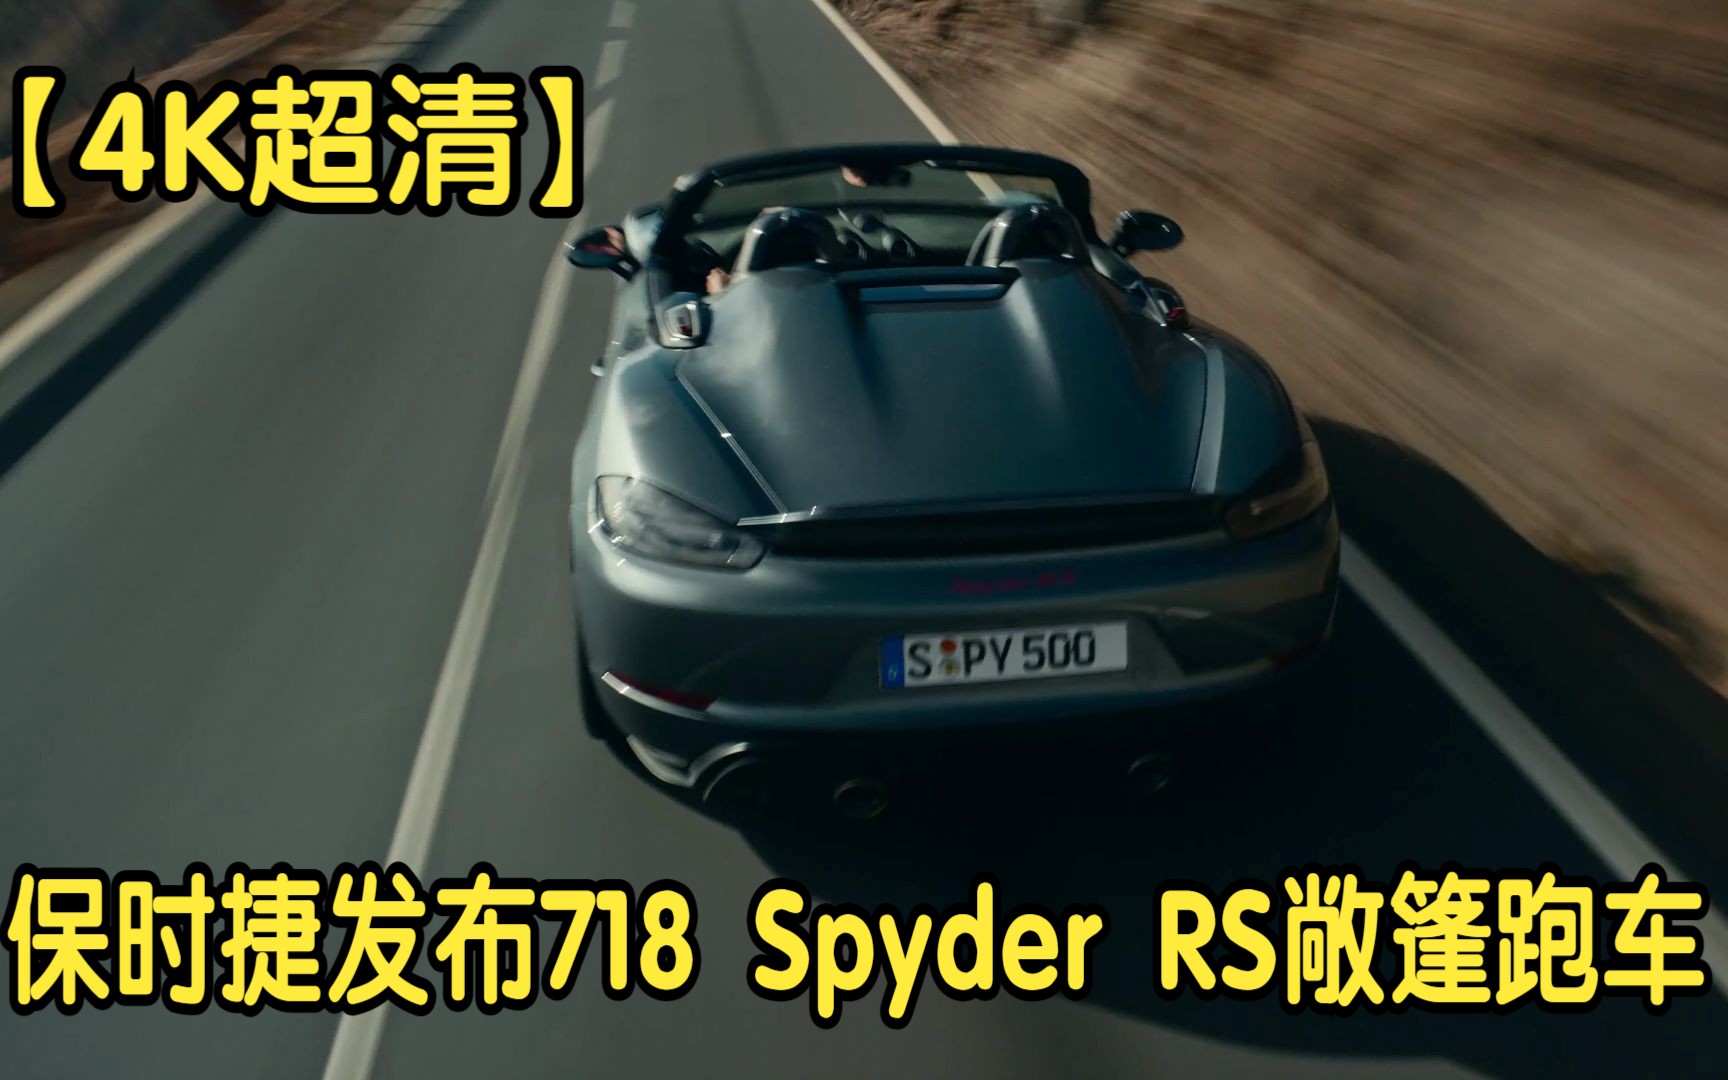 【4K超清】保时捷发布718 Spyder RS敞篷跑车